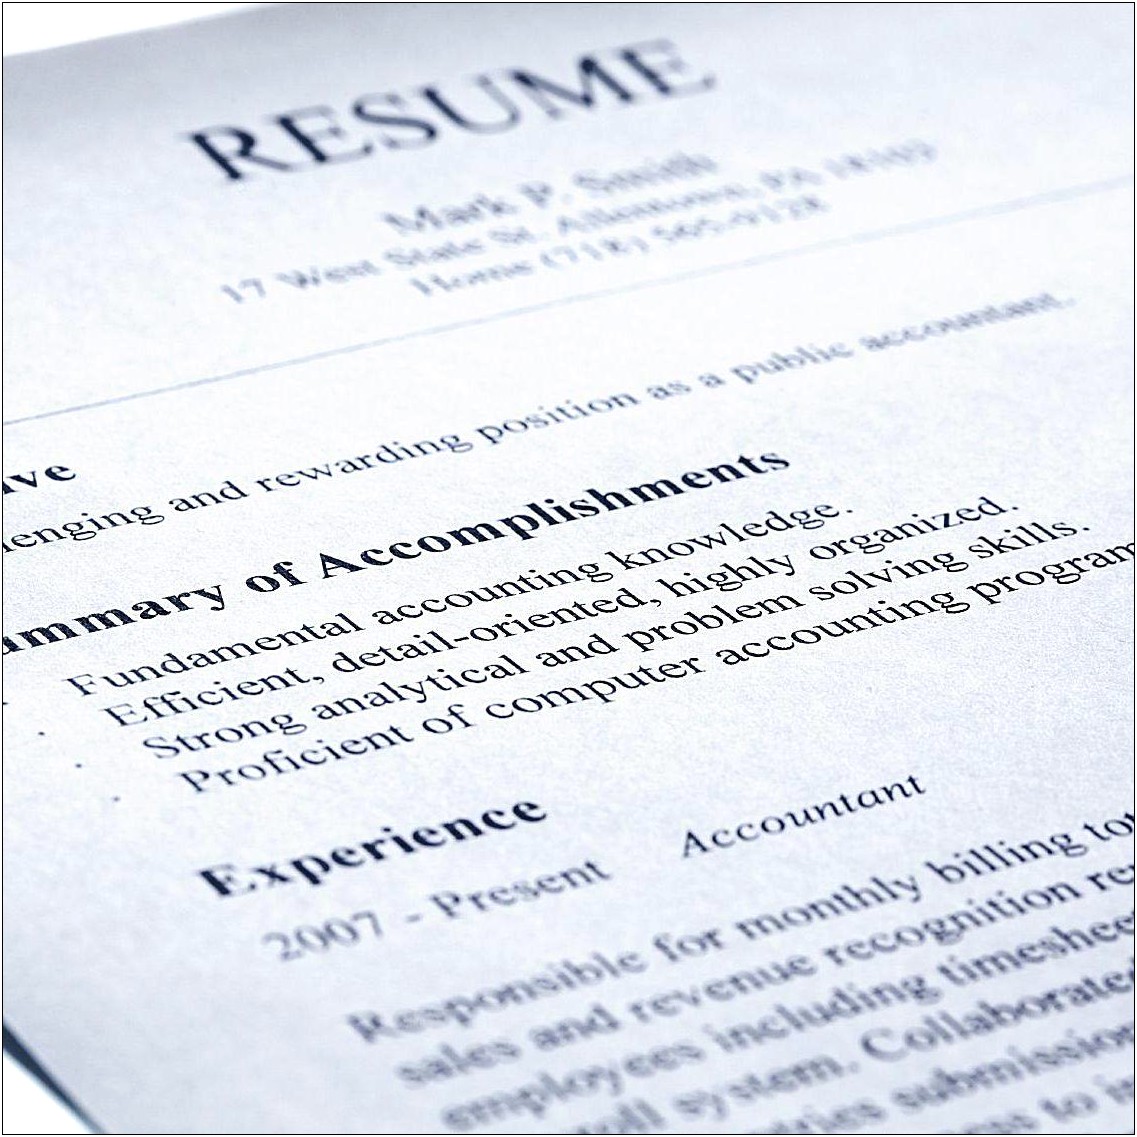 Information Technology Acquisition Job Description For Resume